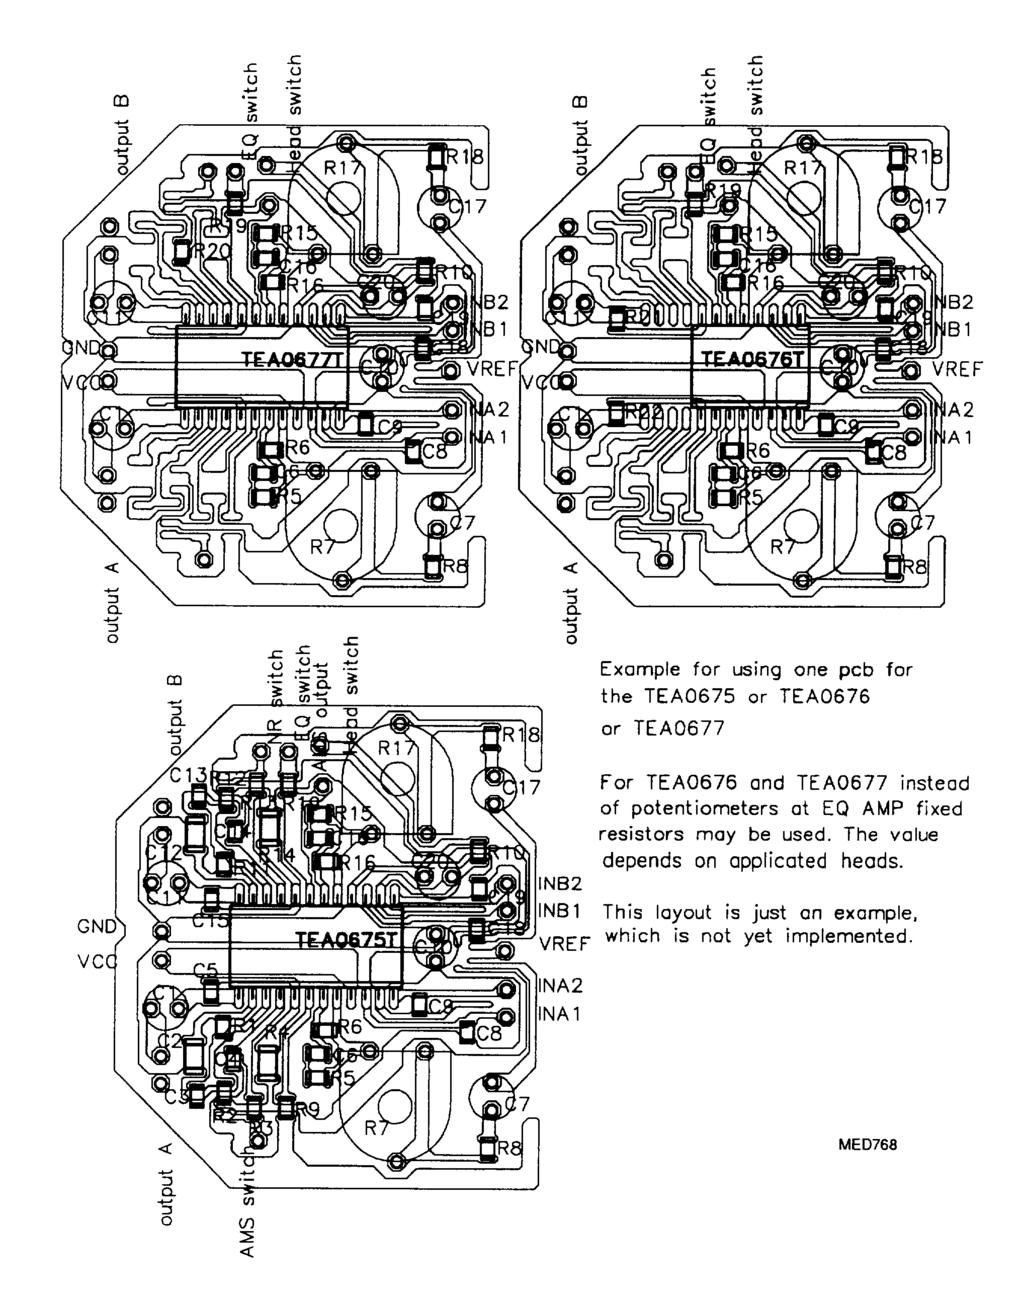 Fig.5 PCB layout